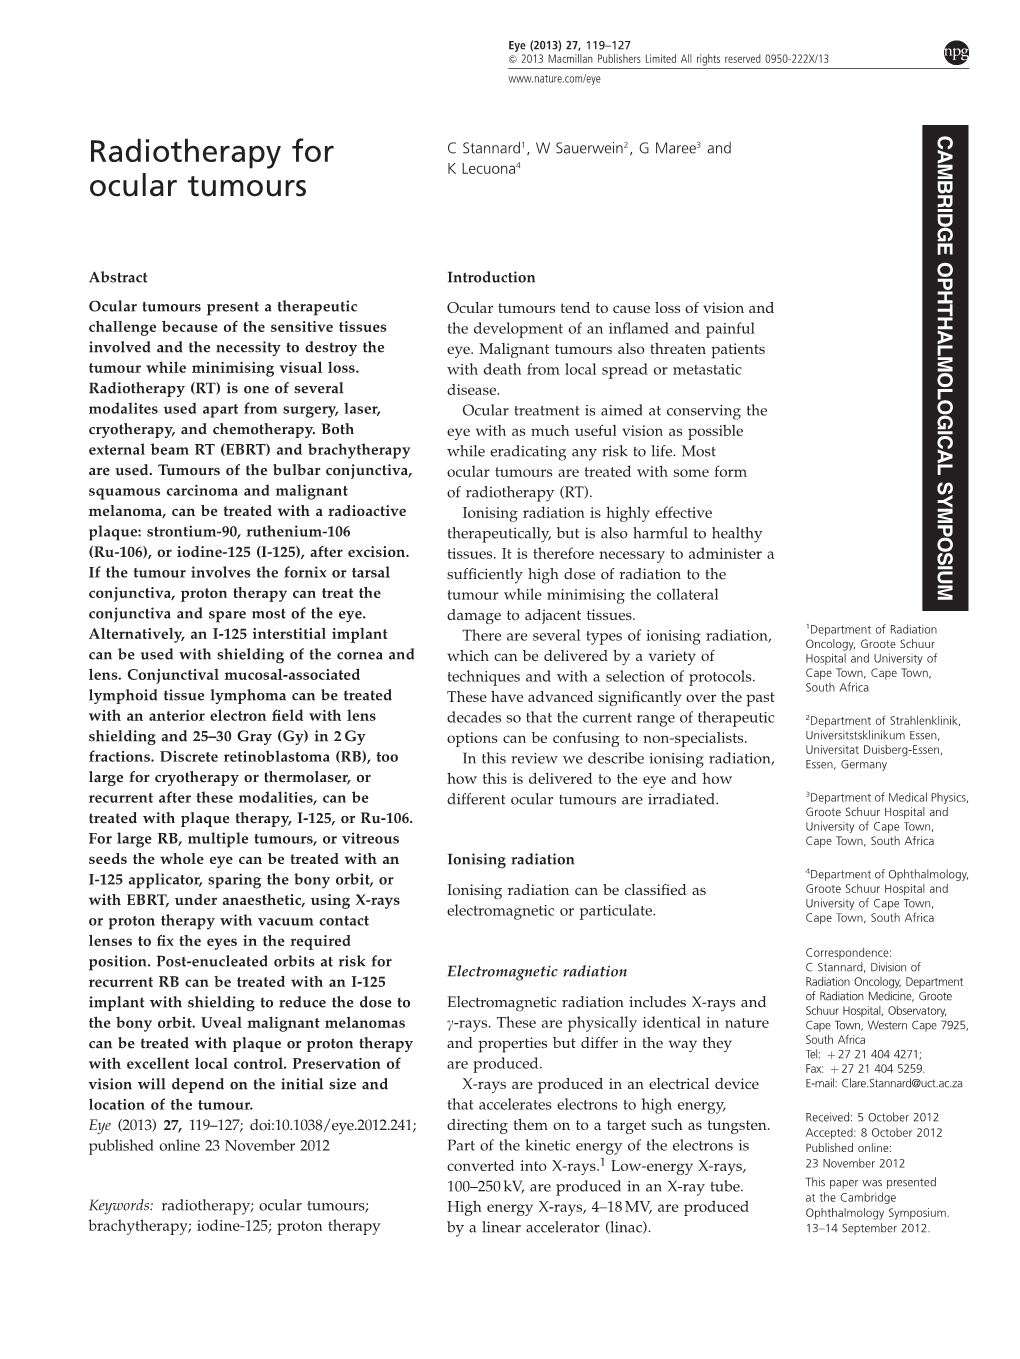 Radiotherapy for Ocular Tumours C Stannard Et Al 120